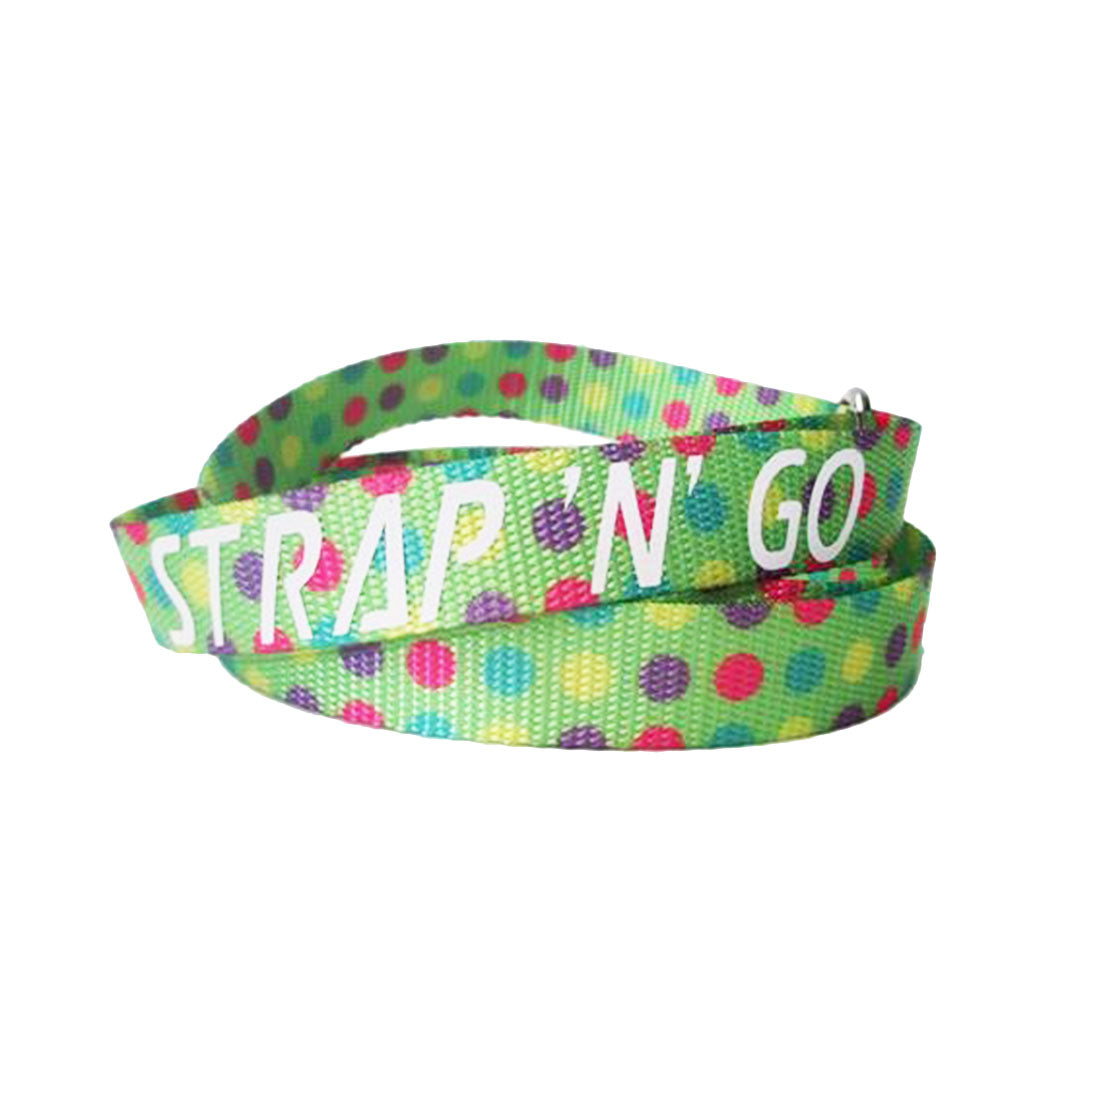 Strap N Go Skate Noose/Leash - Patterns Candy Dots Roller Skate Accessories